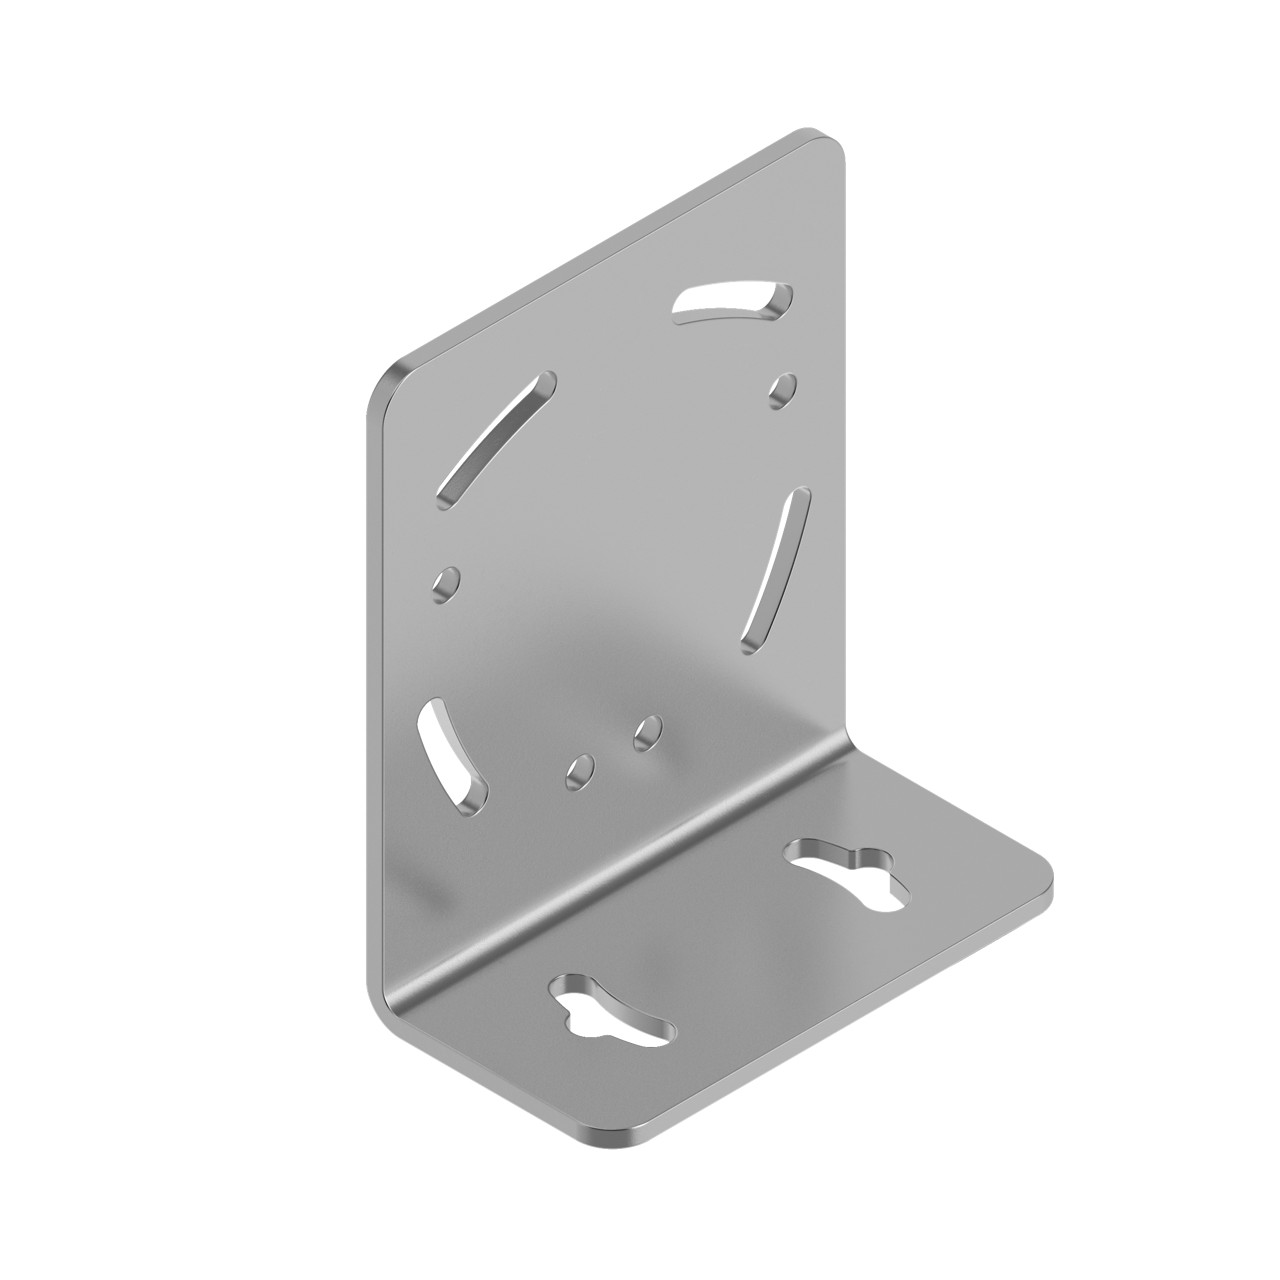 SMBLTFL - Bracket: LTF Series Right-angle bracket; 12 gauge Stainless Steel